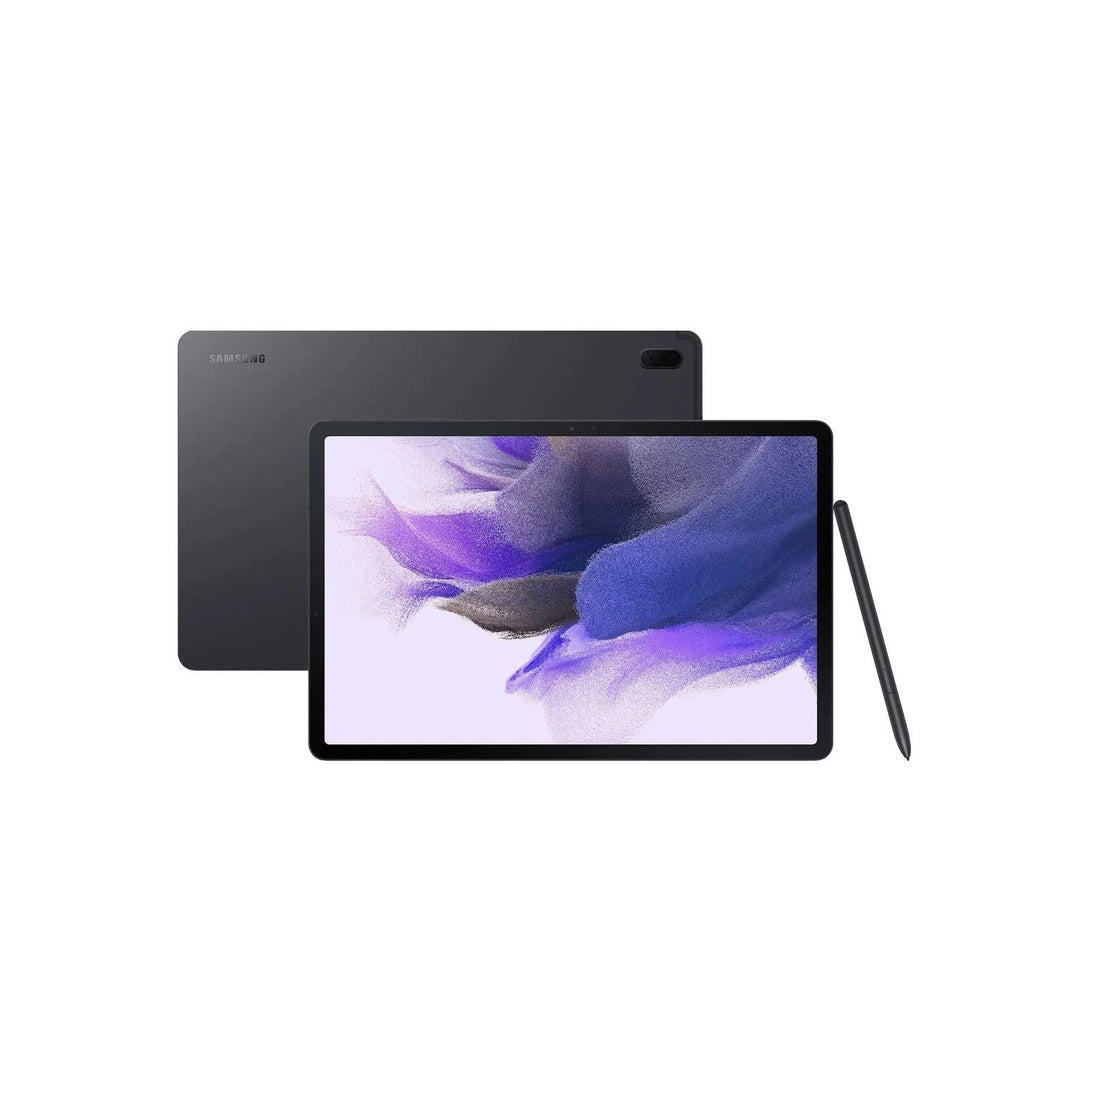 Samsung Galaxy Tab S7 FE Tablet Android 12,4 Pollici Wi-Fi RAM 4 GB 64 GB Tablet Android 11 Black [Versione italiana] 2021-iStoreMilano